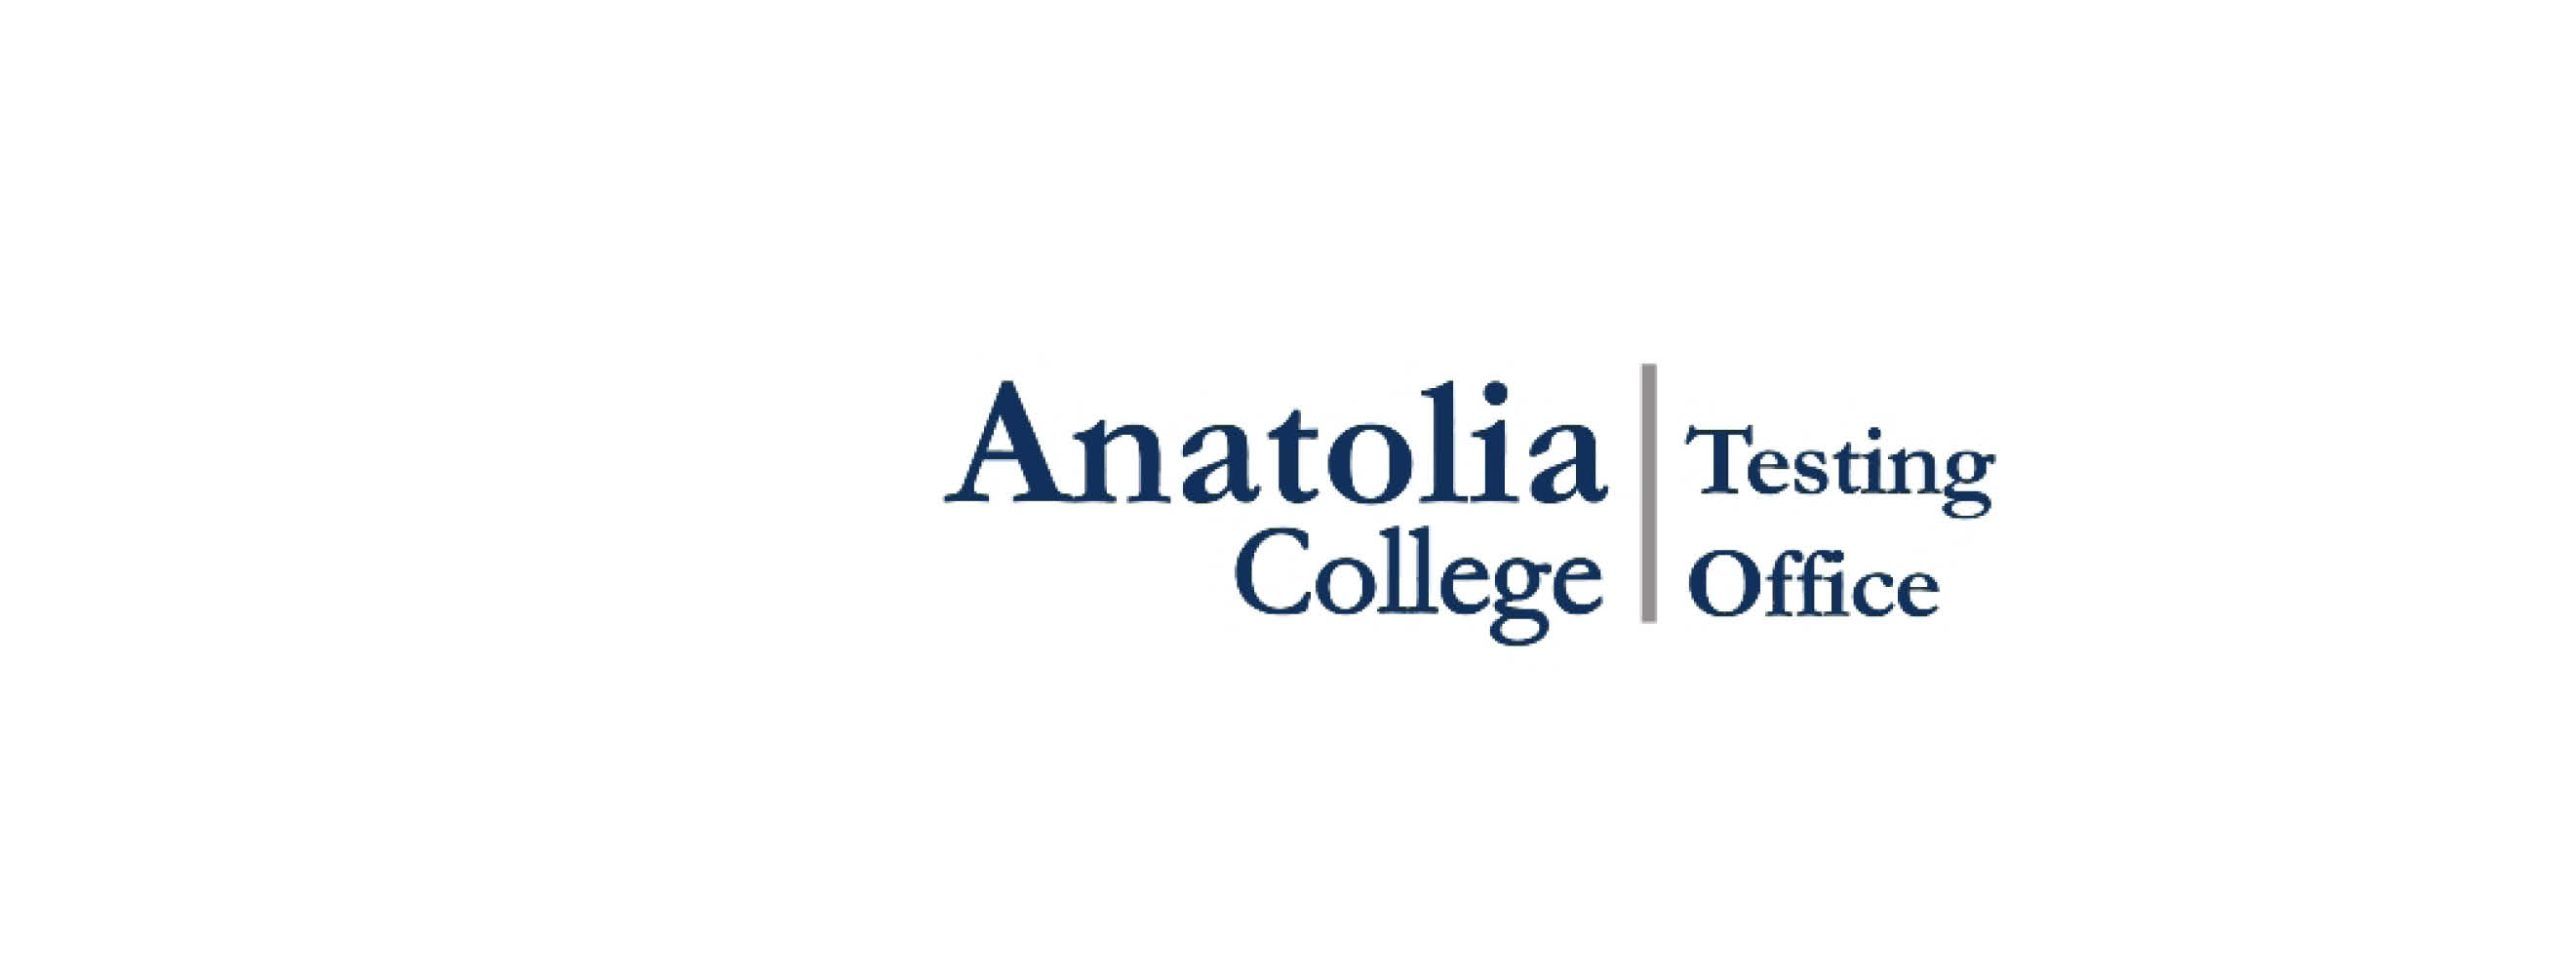 Anatolia College Testing Office